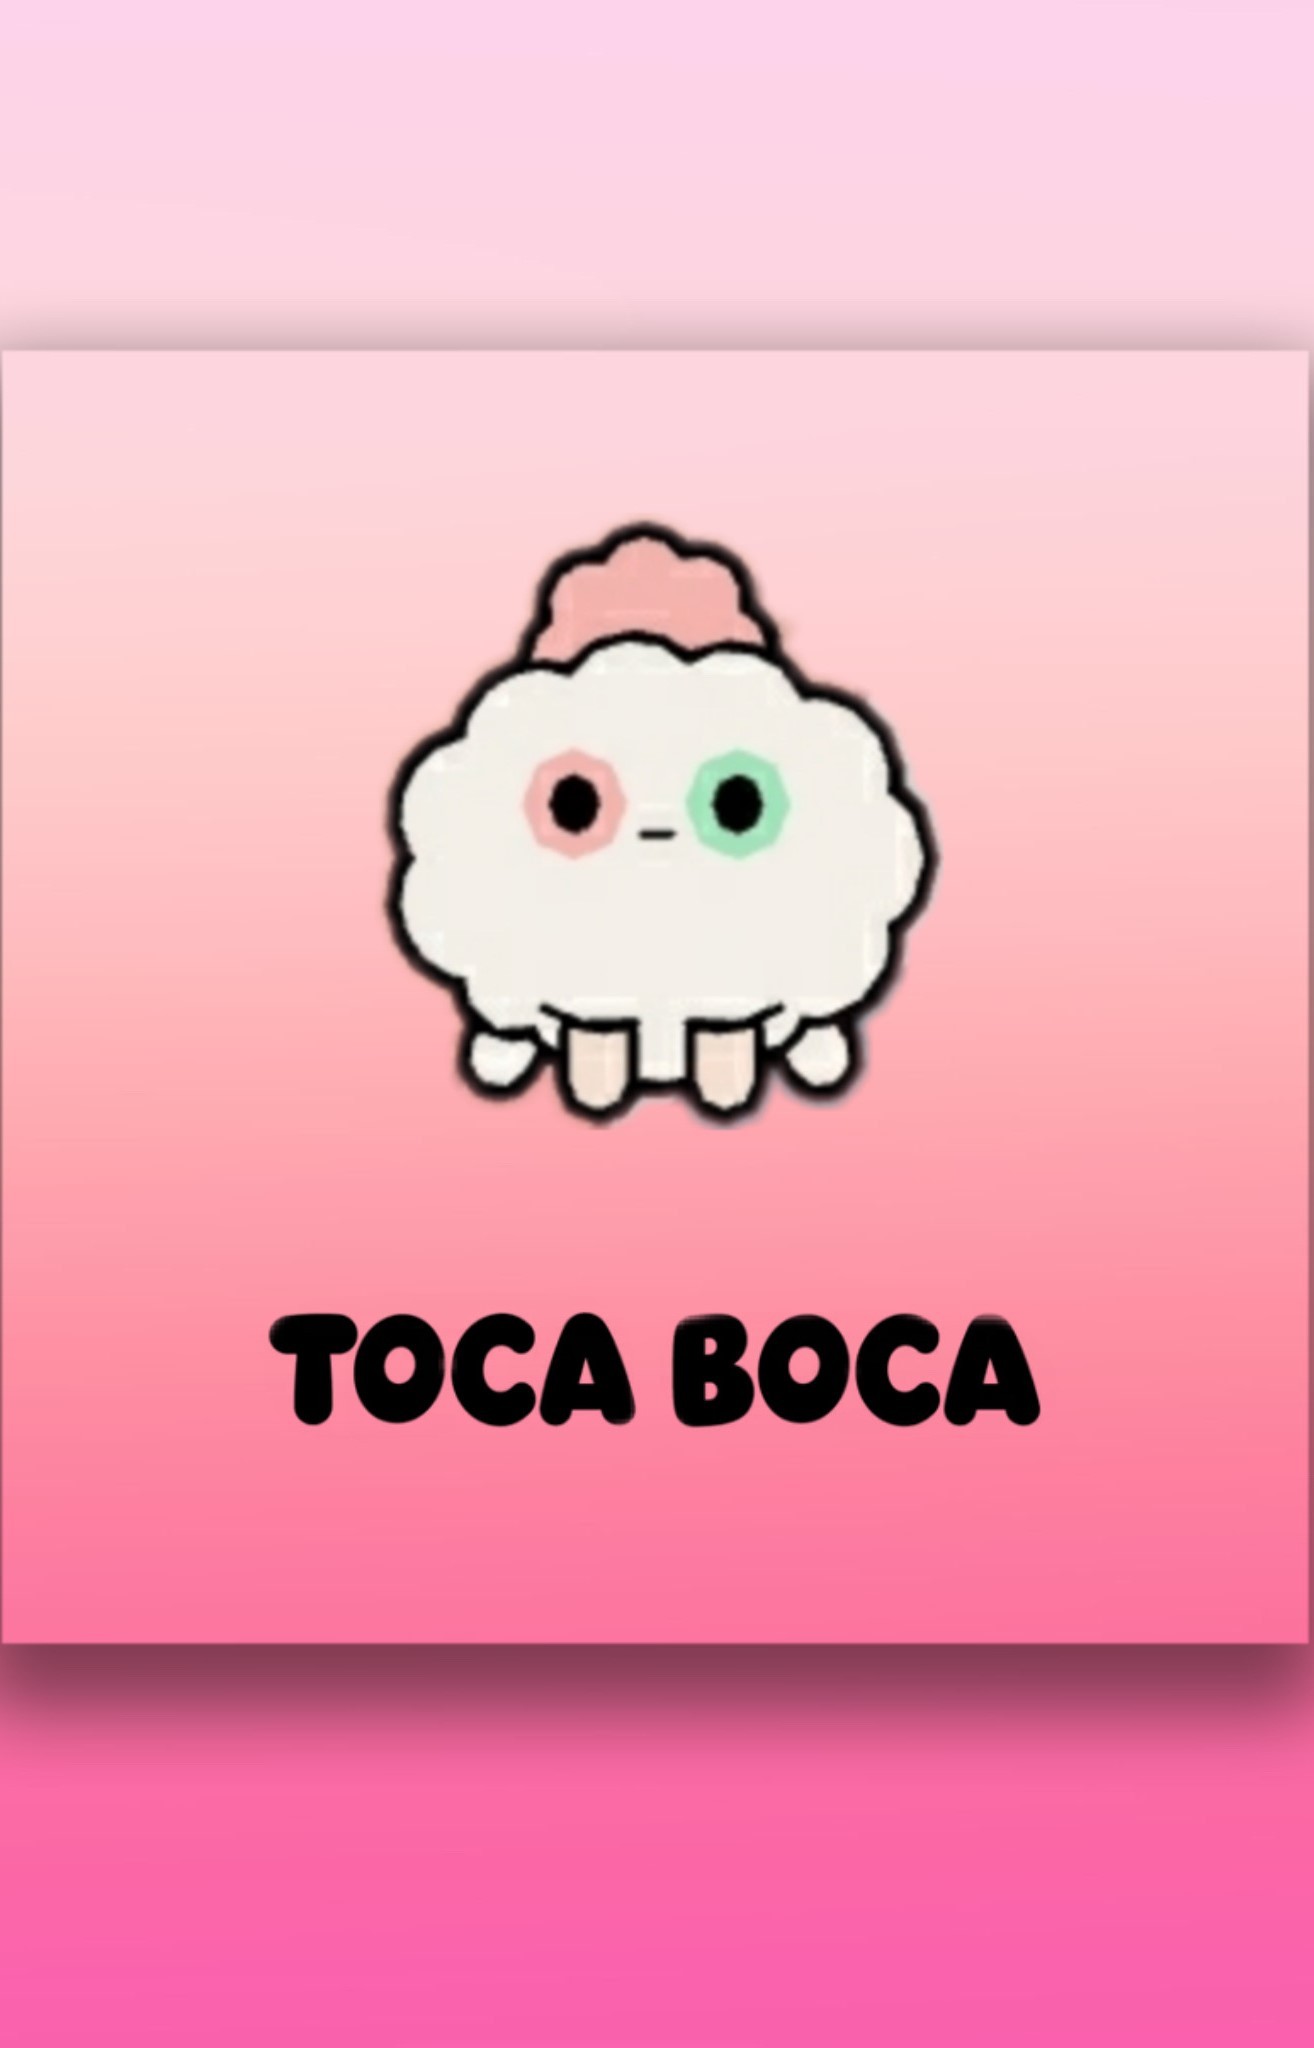 Cute Aesthetic Toca Boca Wallpaper